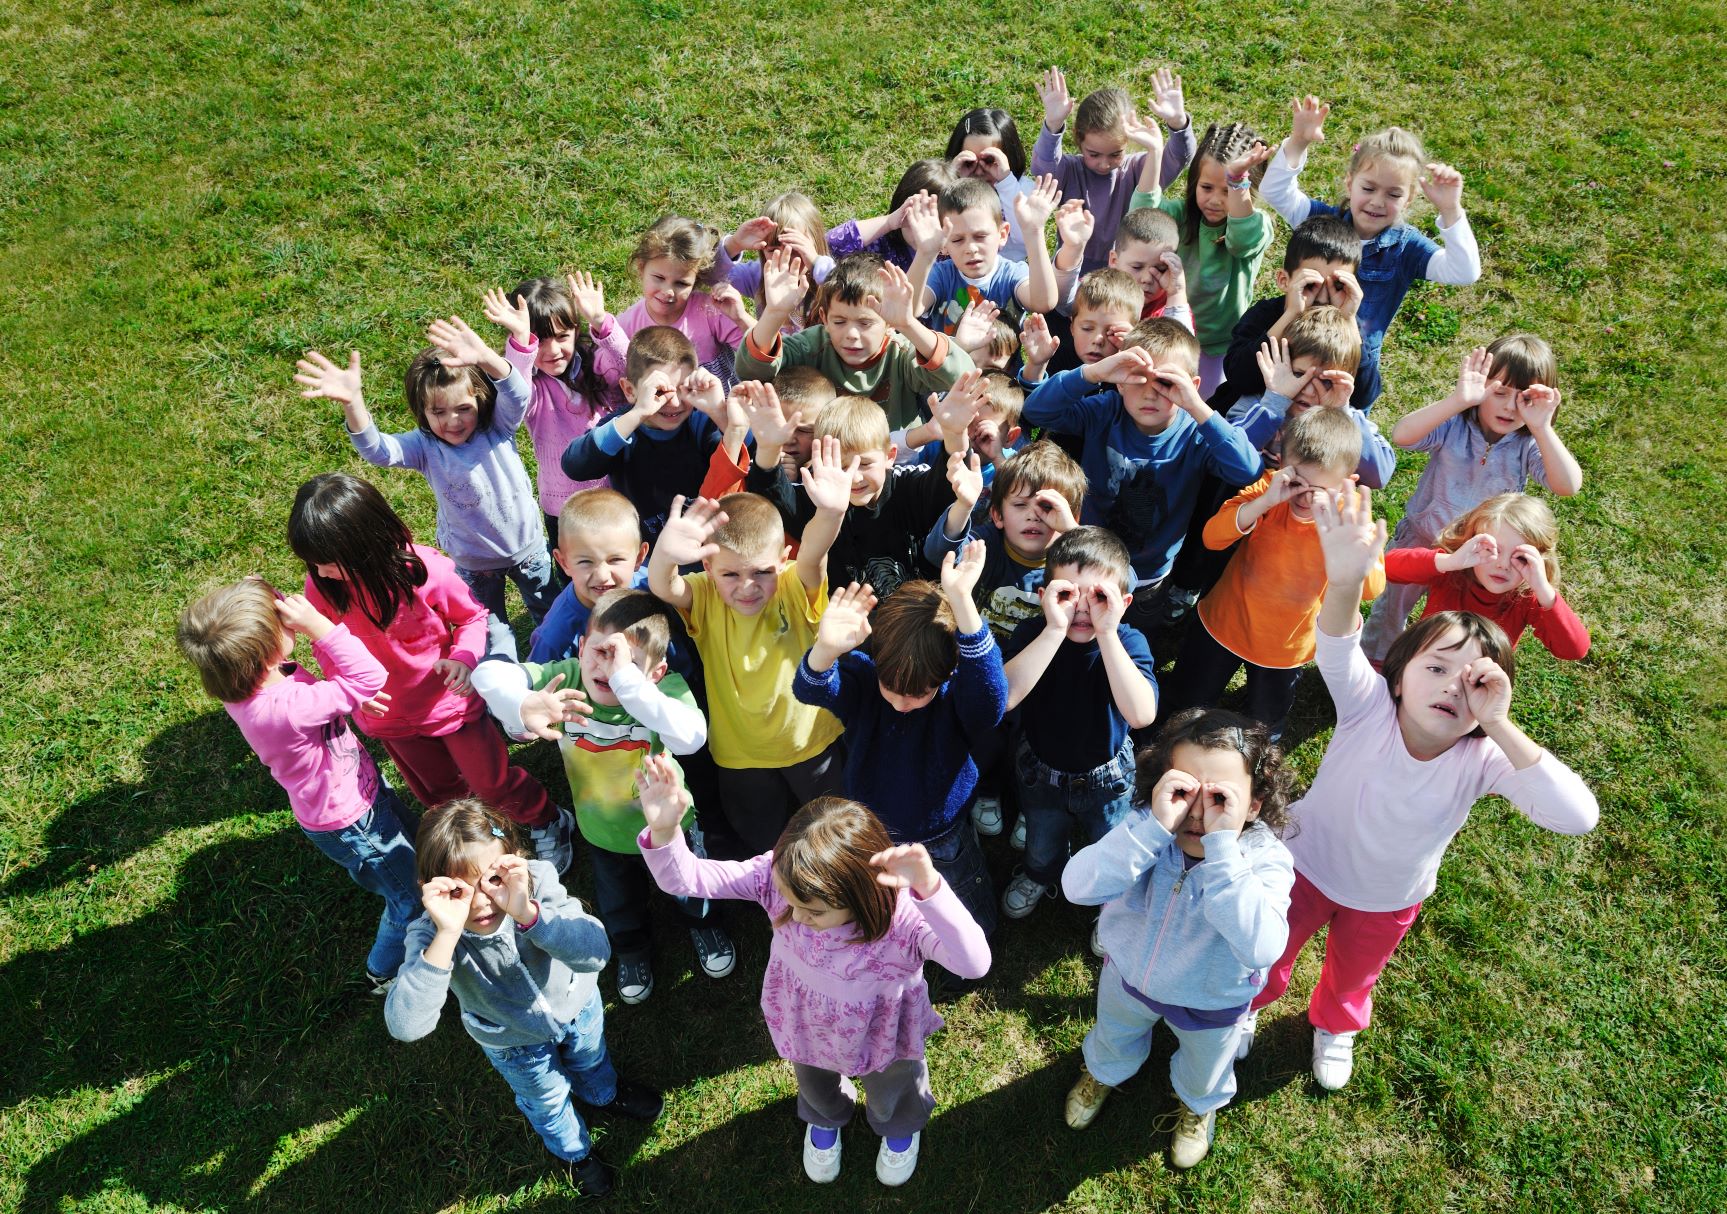 Preschool kids outdoors. Image courtesy of Storyblocks.